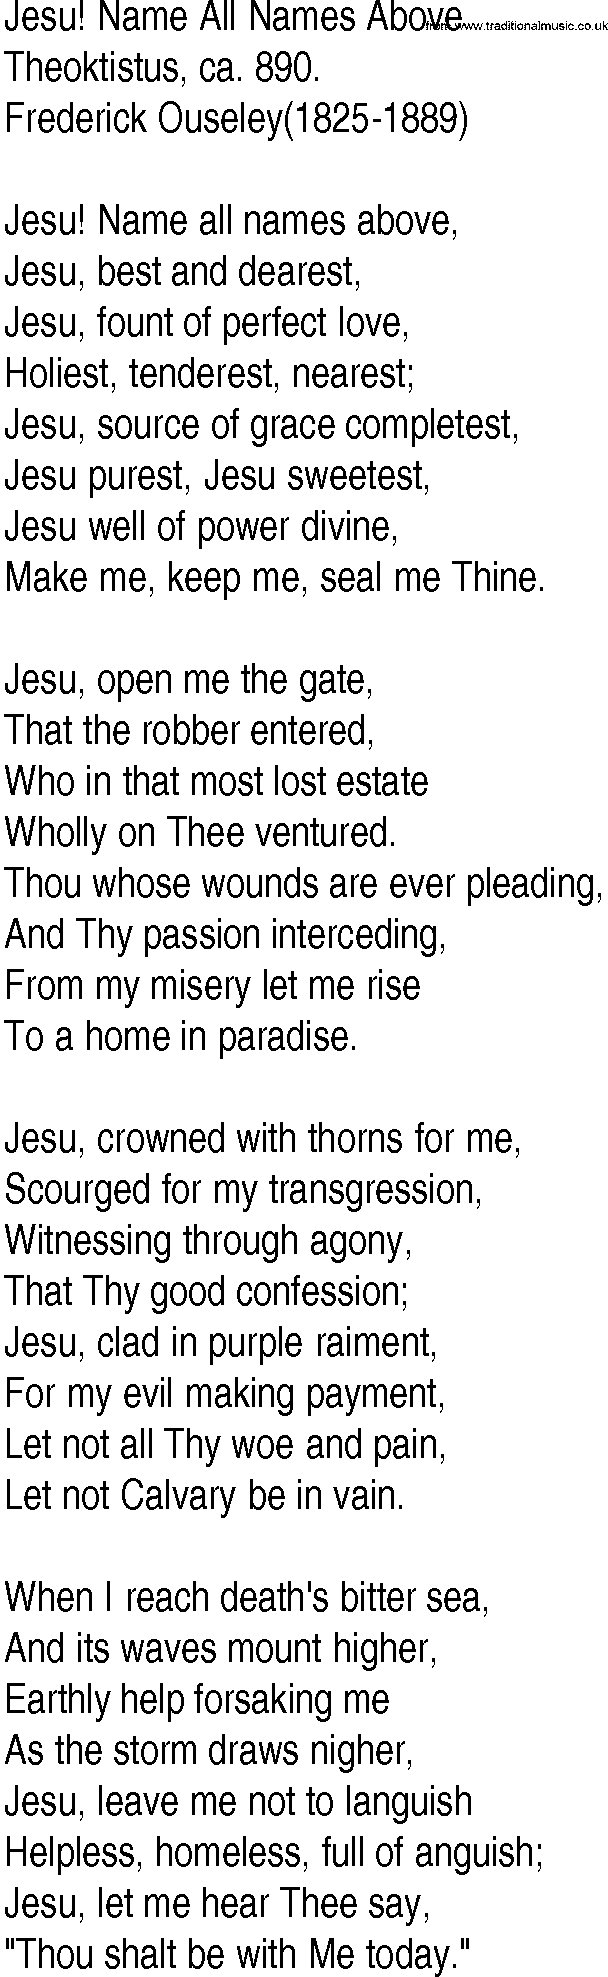 Hymn and Gospel Song: Jesu! Name All Names Above by Theoktistus ca lyrics